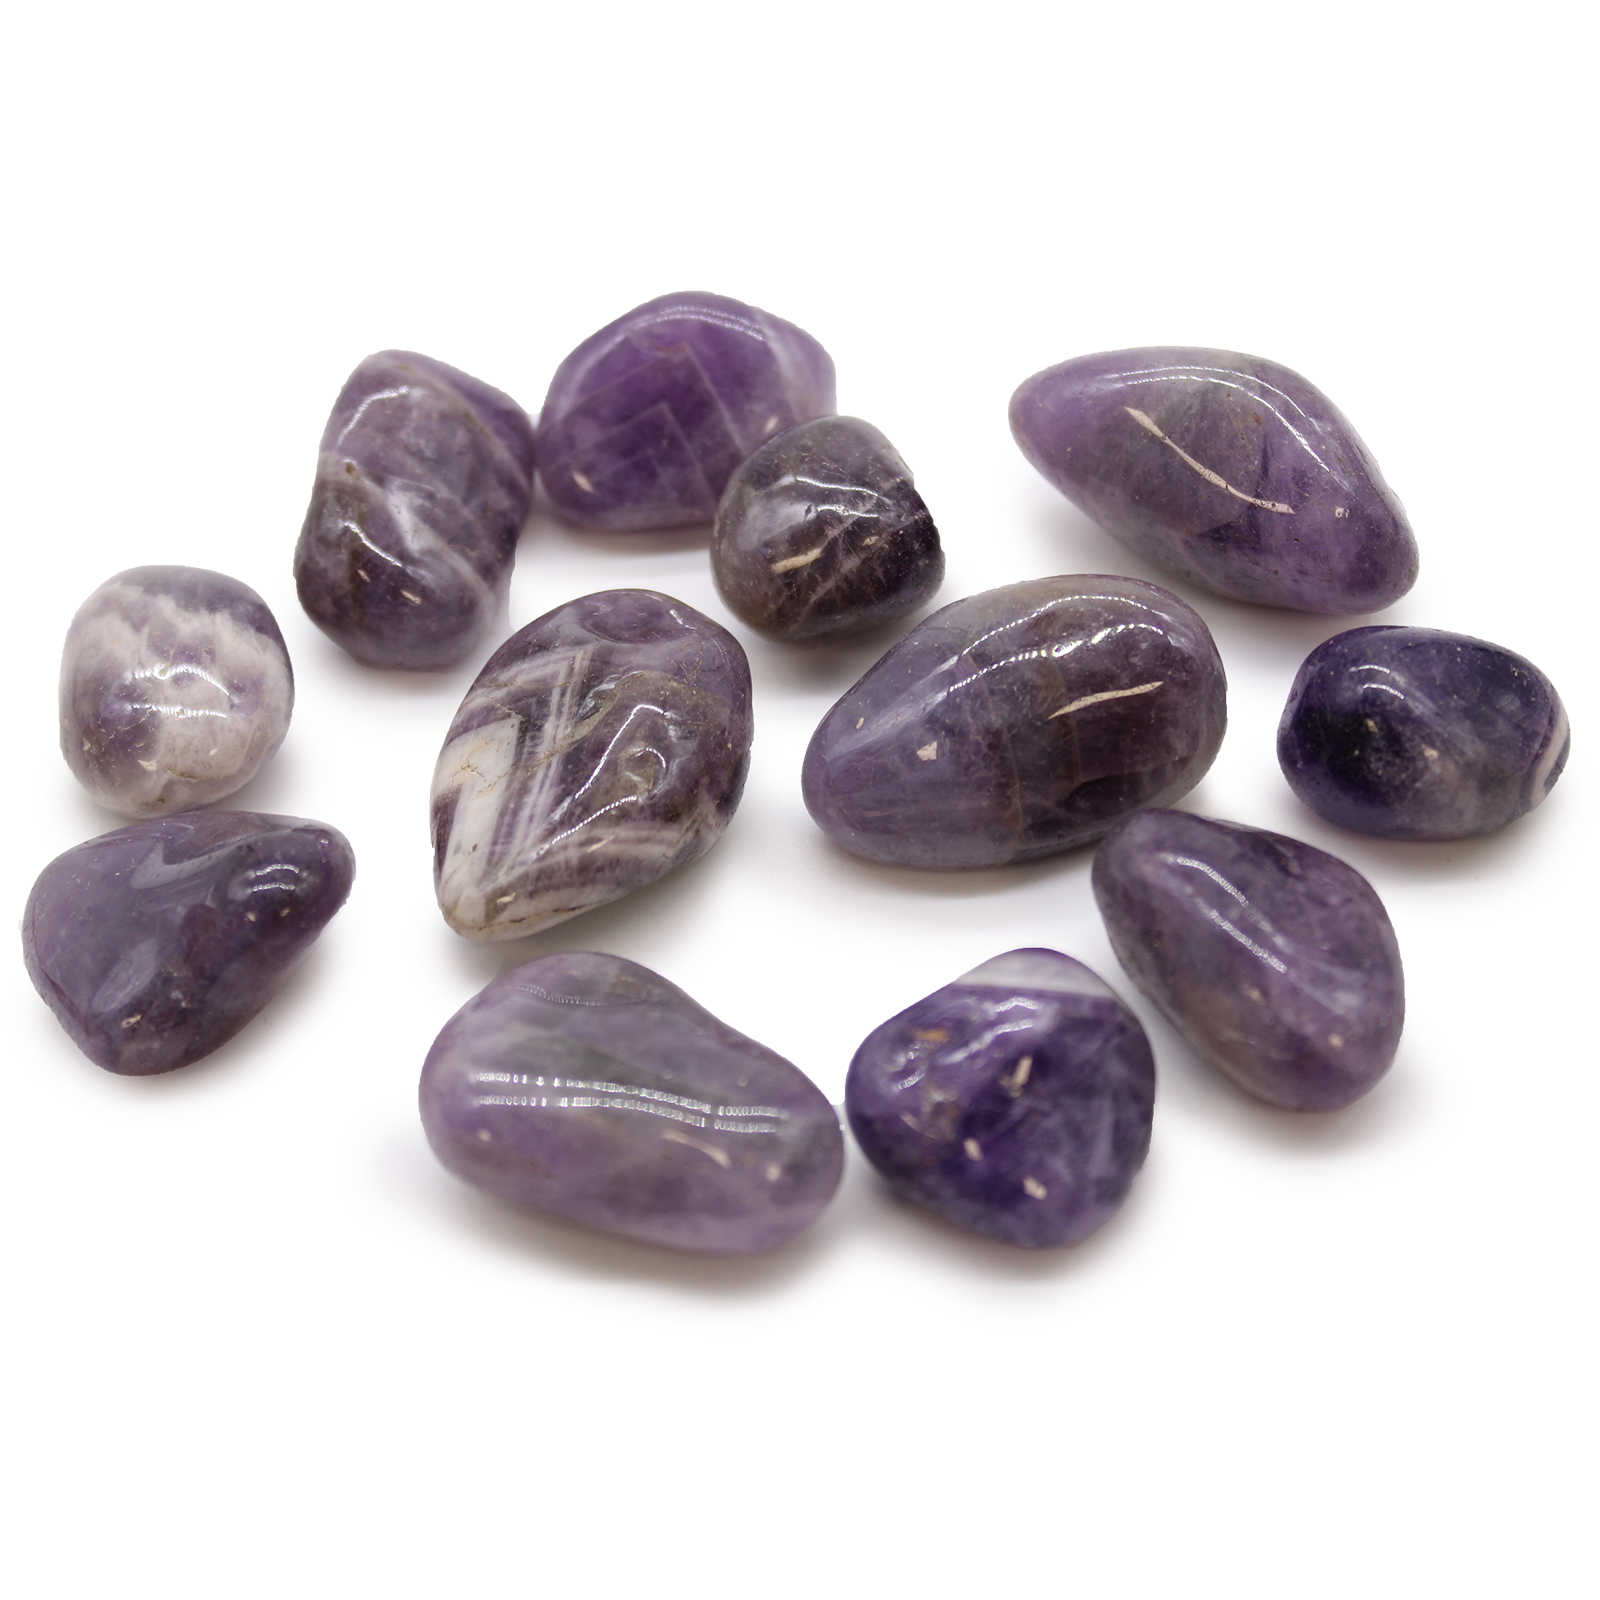 12 x Medium African Tumble Stones - Amethyst